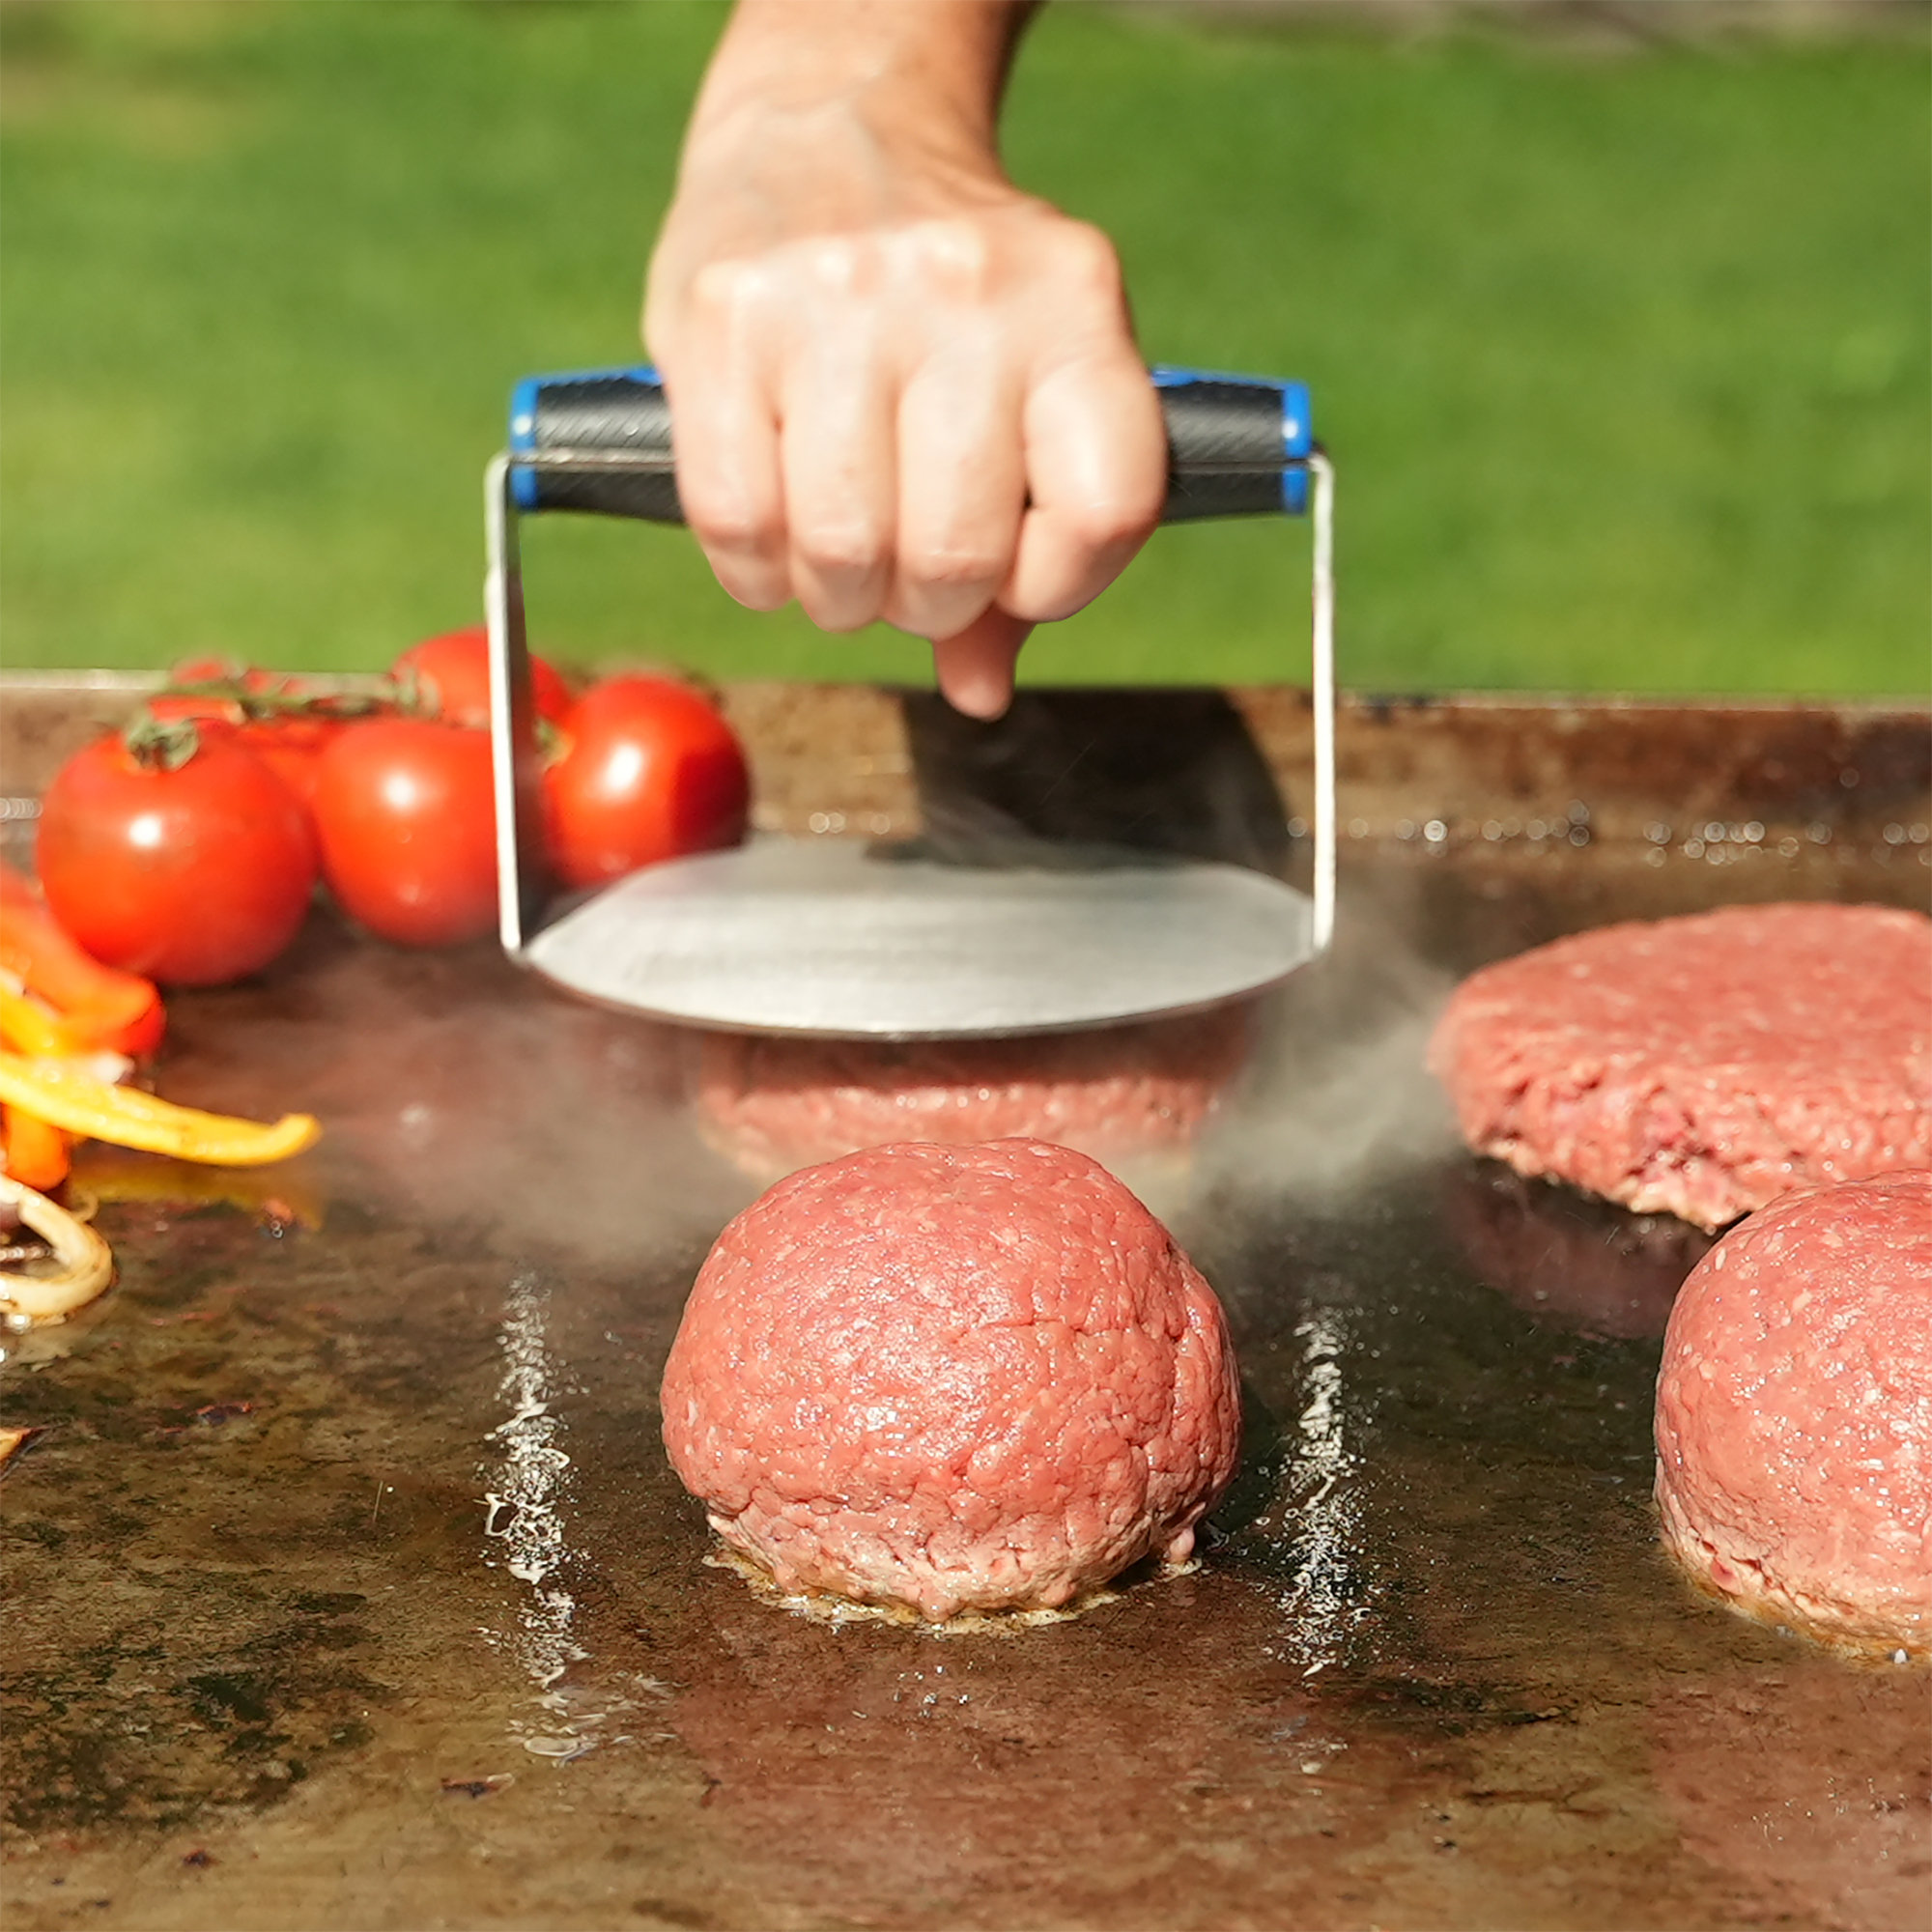 Smash Burger Press For Griddle, Hamburger Press Patty Maker, Stainless  Steel Meat Flattener Tool, Burger Smasher For Cooking